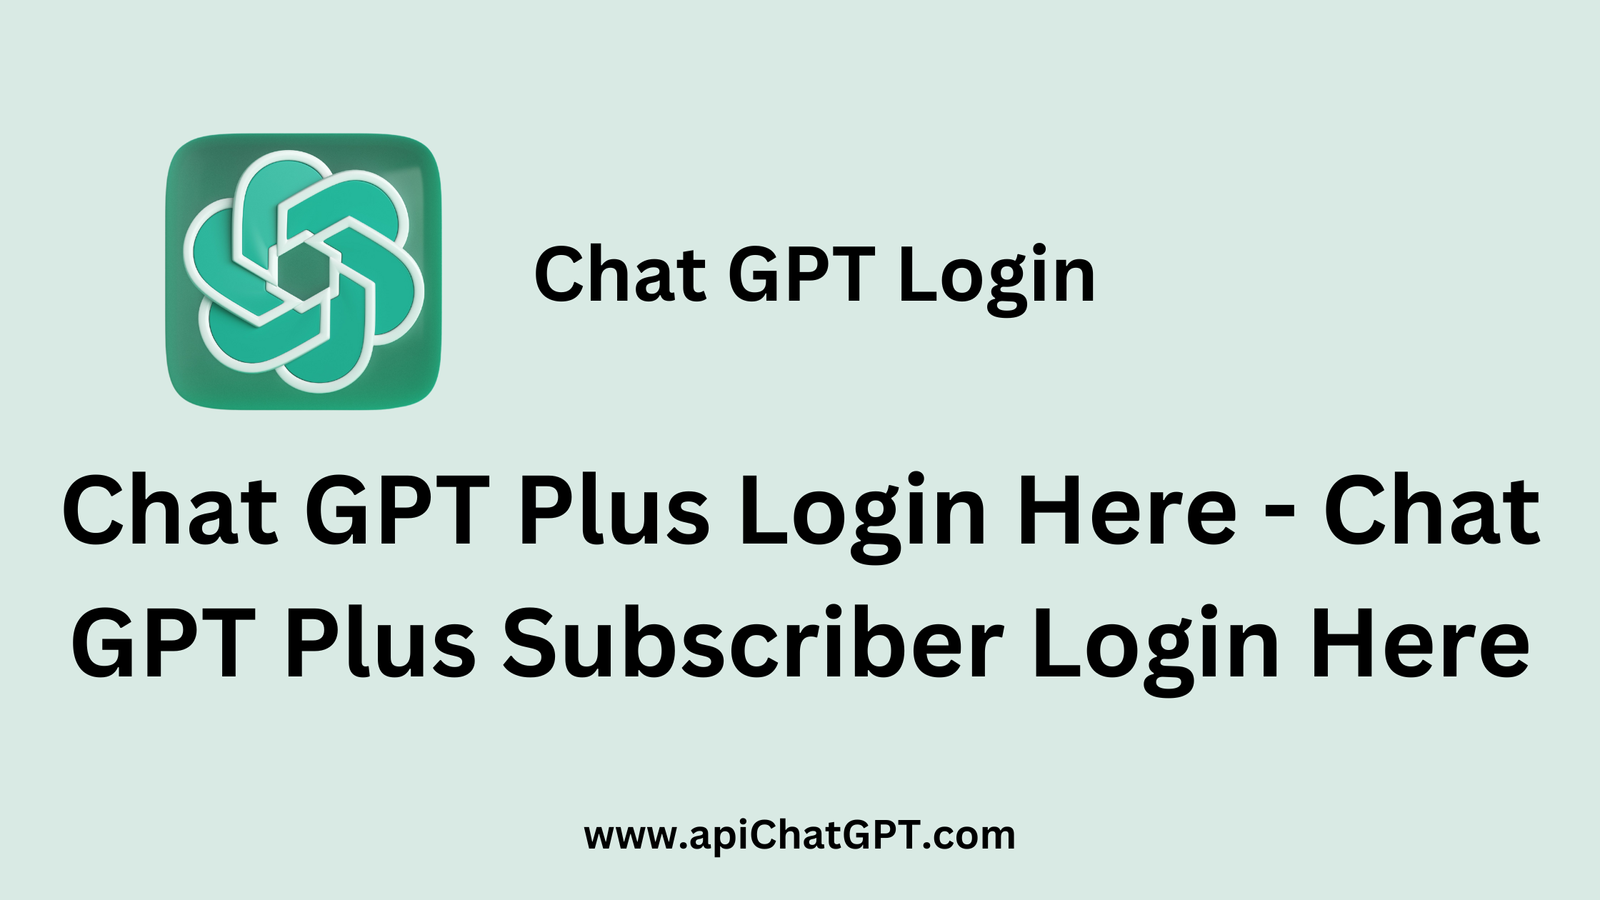 Chat GPT Login Chat GPT Plus Login Here - Chat GPT Plus Subscriber Login Here - Chat GPT Login